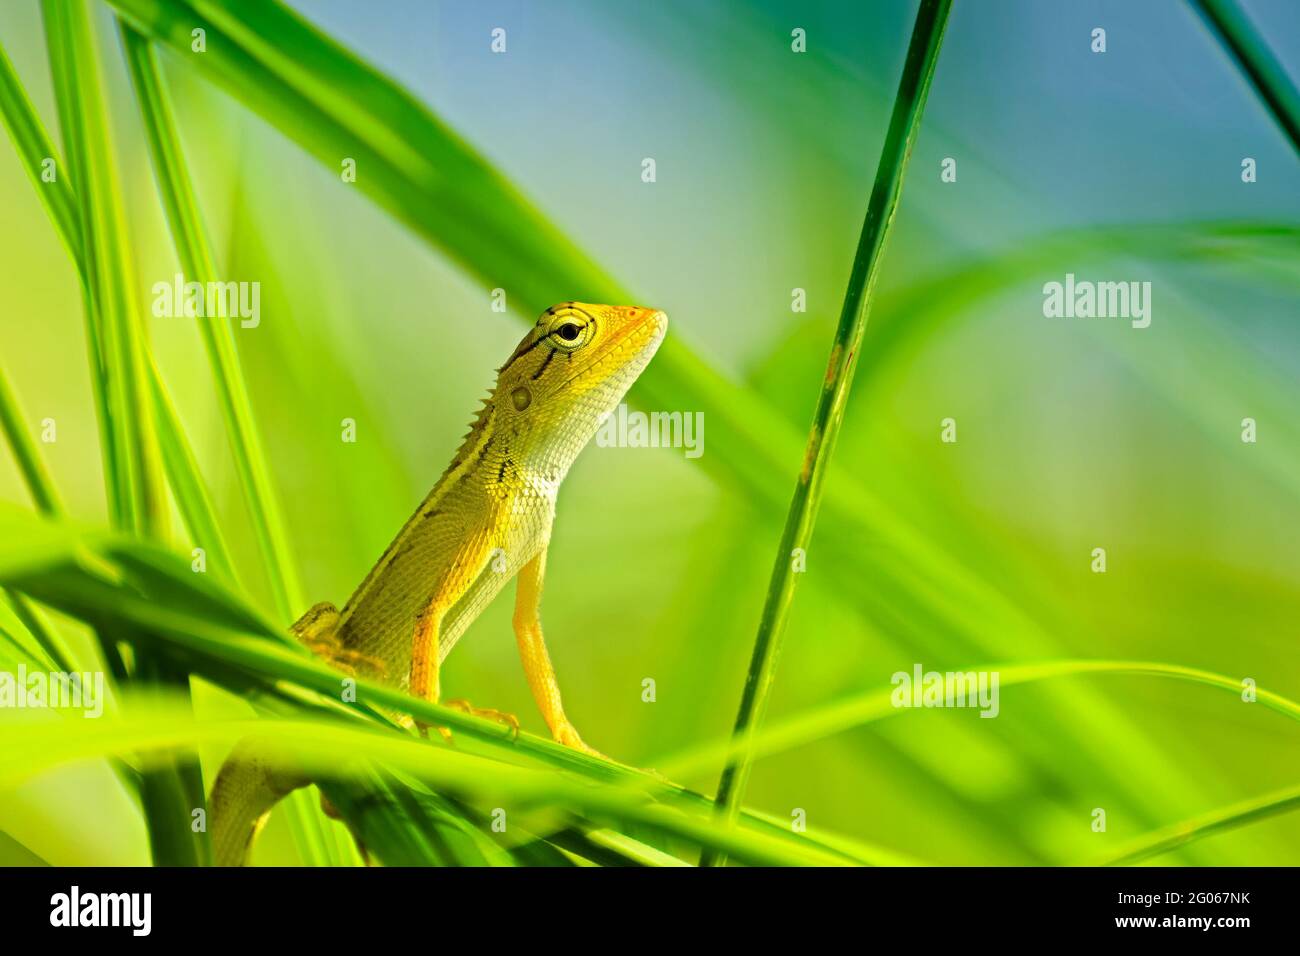 Beautiful Indian gecko inside a bush looking out , green foliage background, morning light , Kolkata, India - nature stock photograph Stock Photo